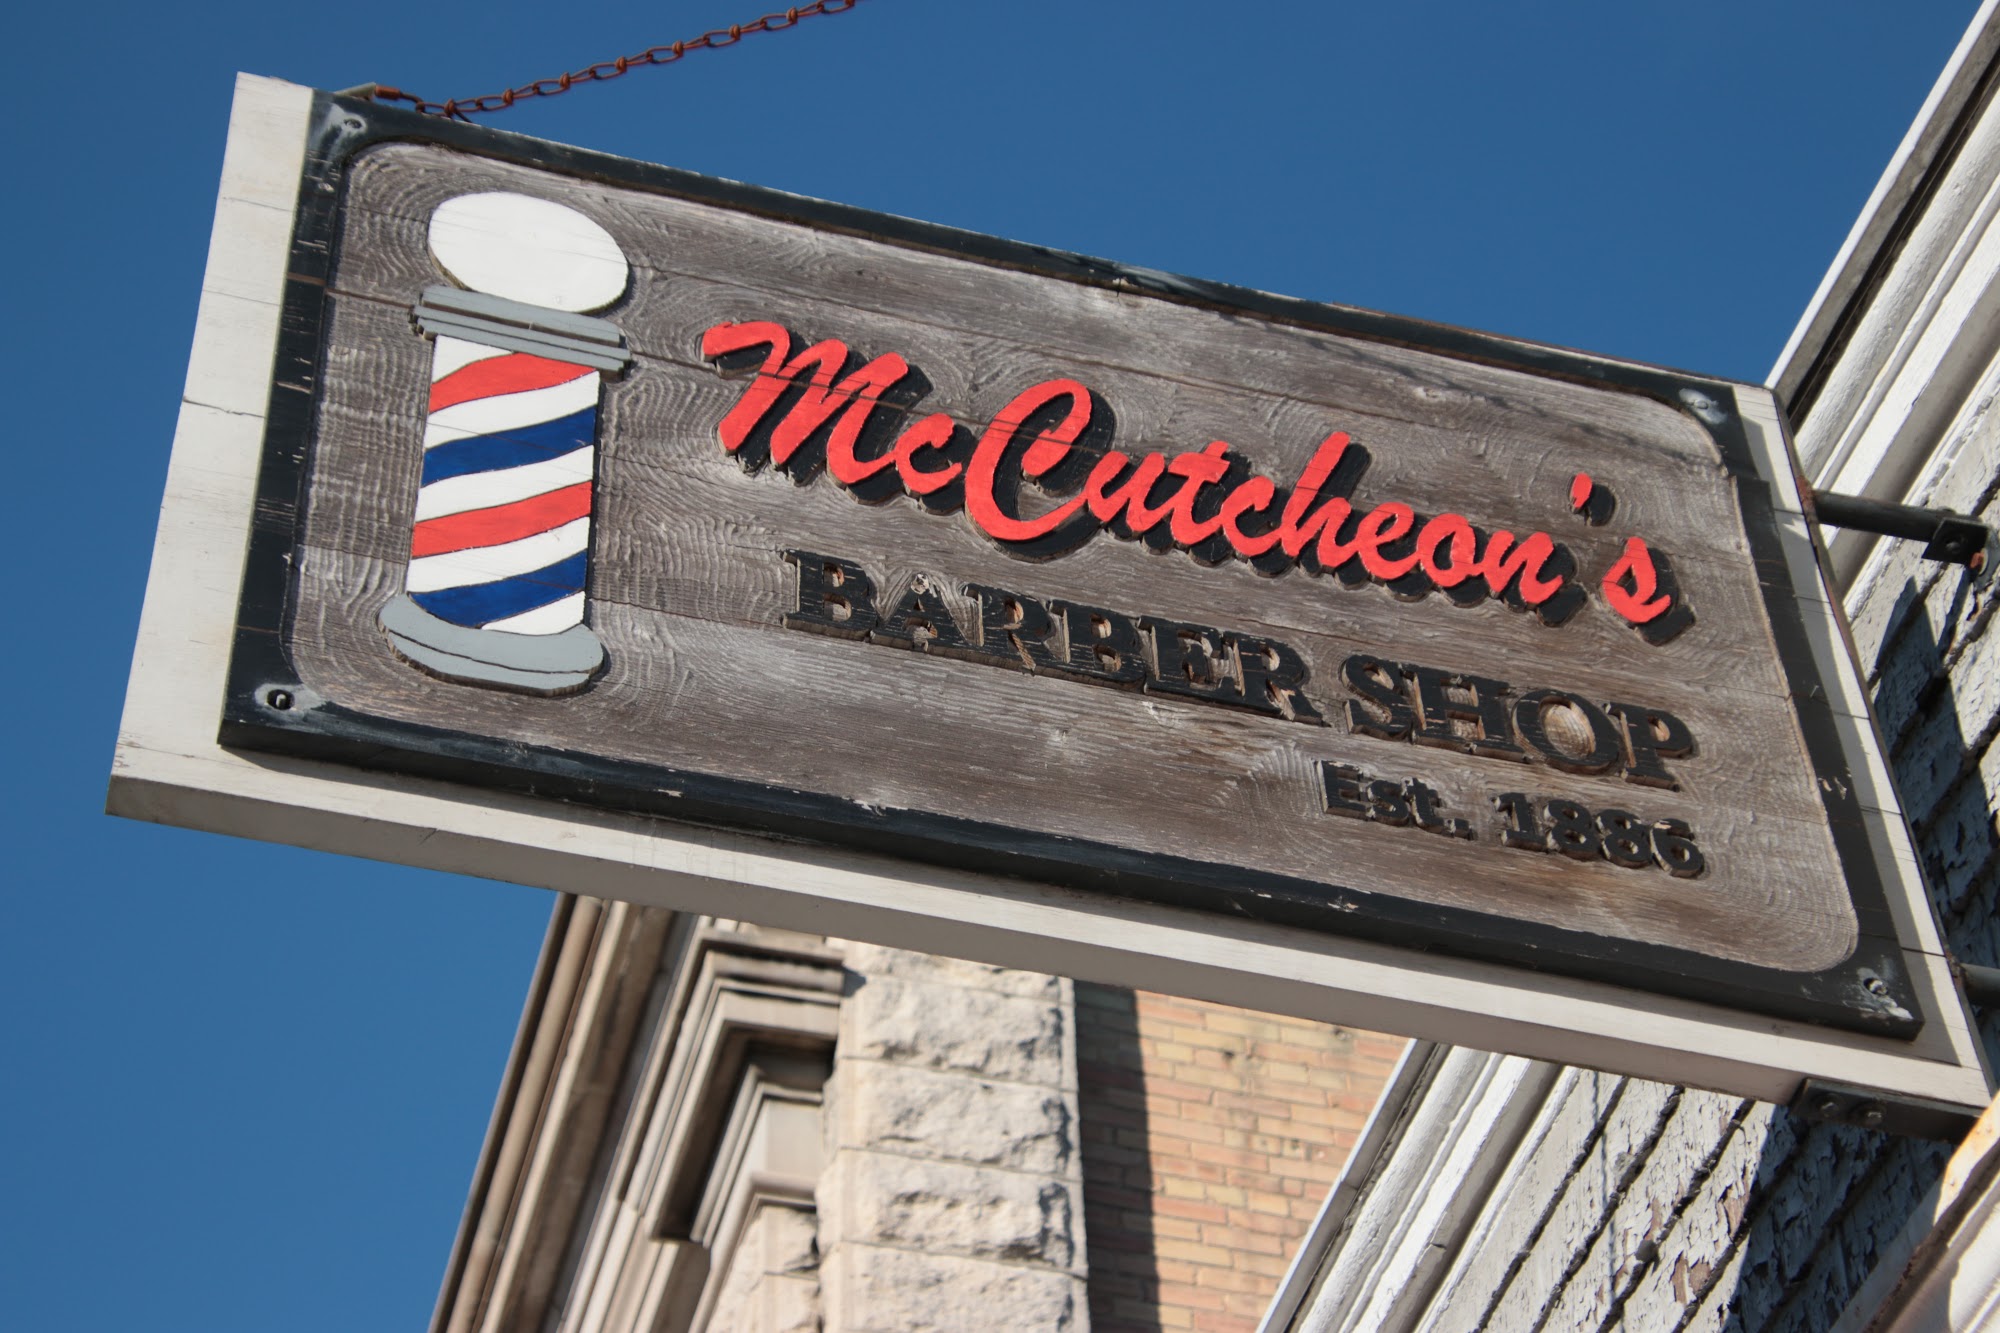 McCutcheon's Barber Shop